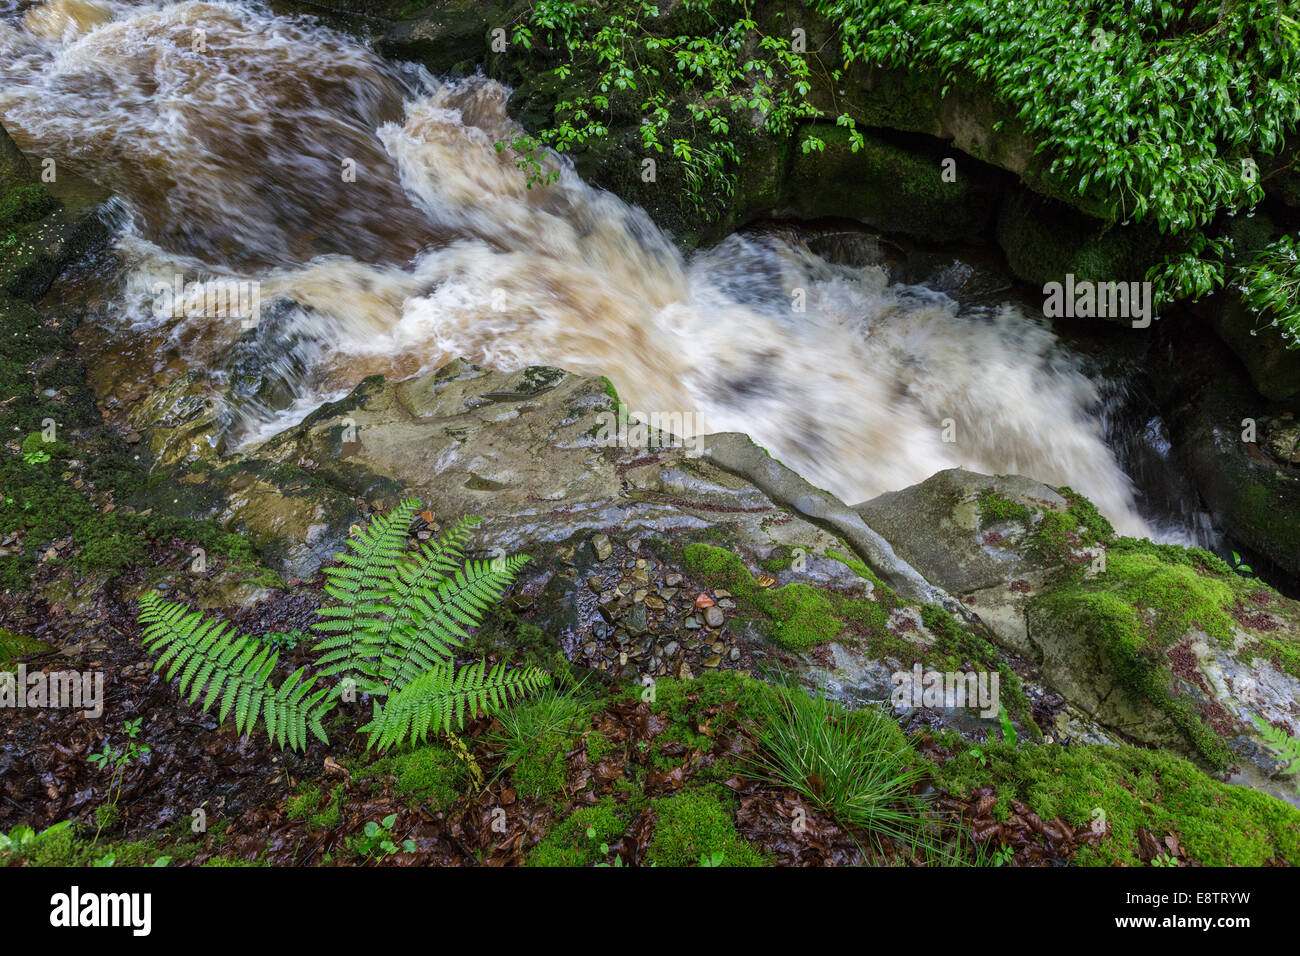 Ferns growing alongside River Clydach, Clydach Gorge, Wales, UK Stock Photo